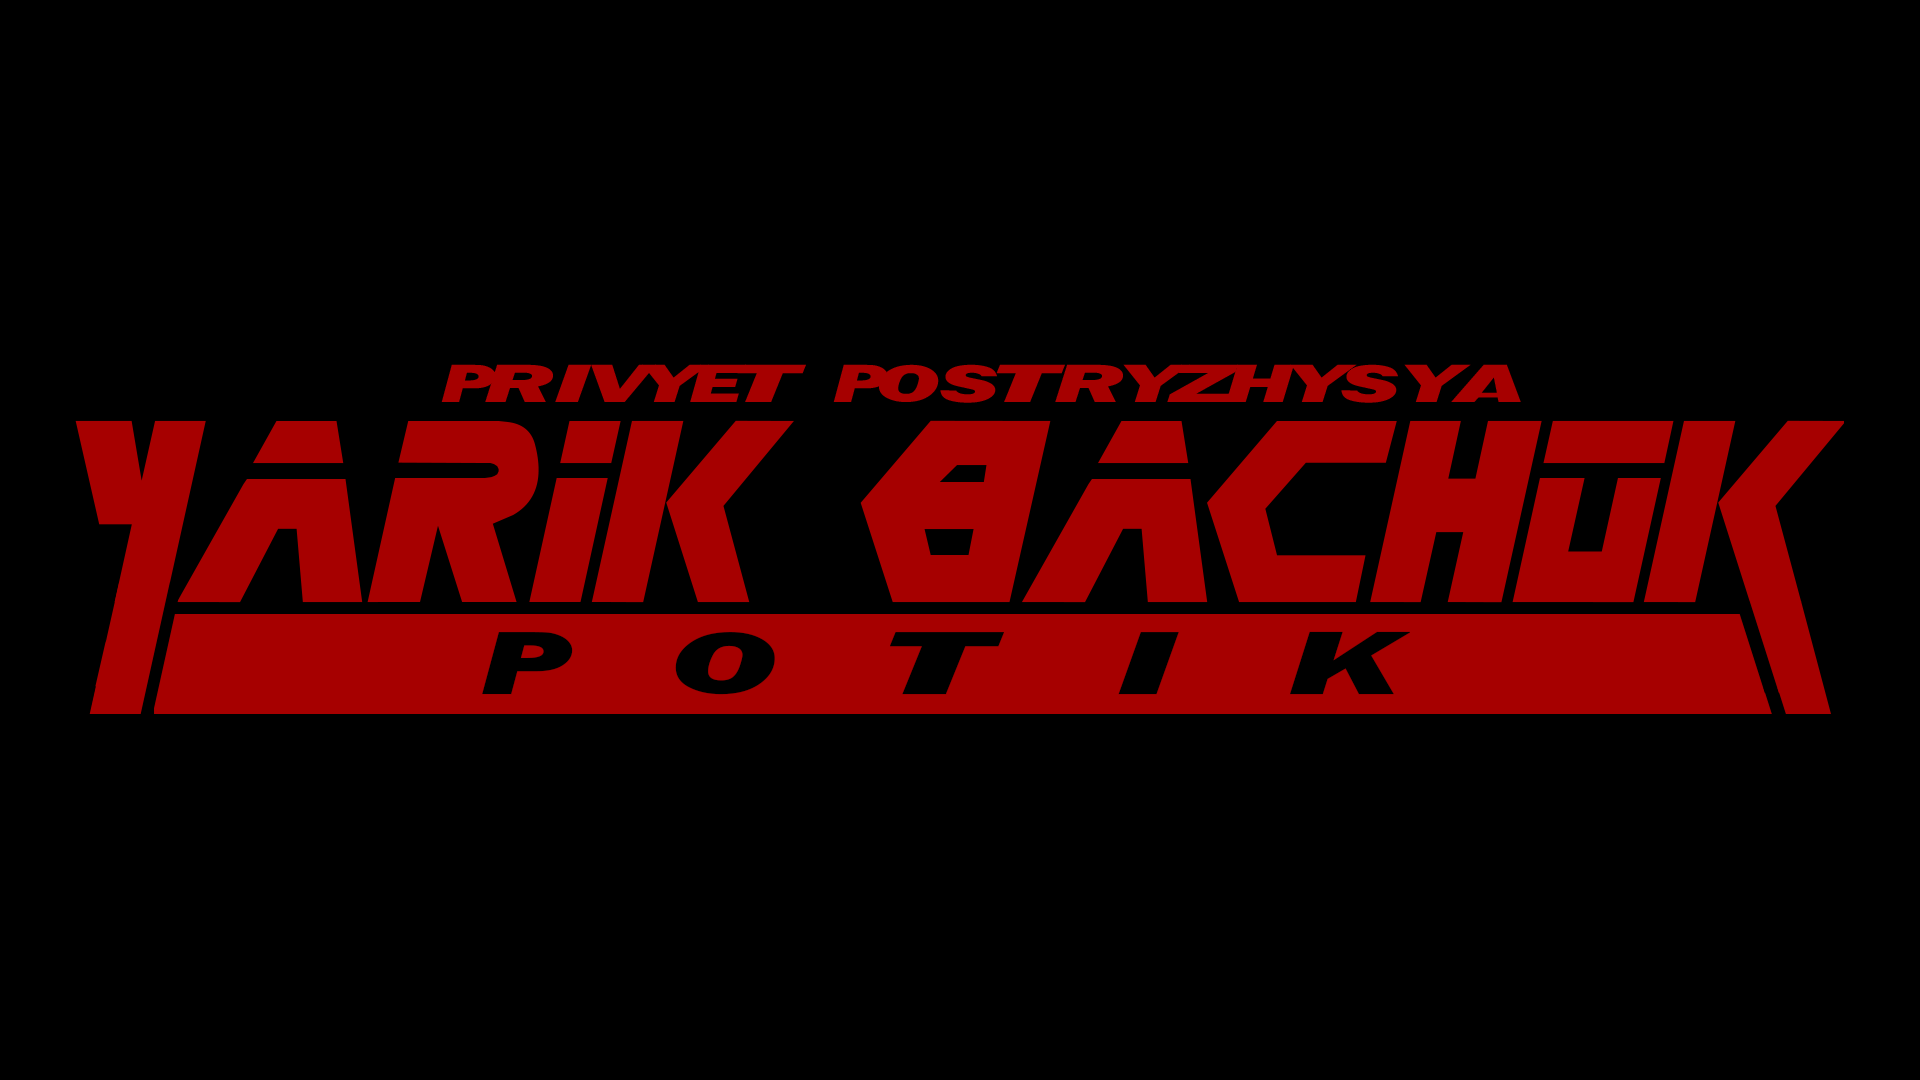 General 1920x1080 minimalism Ukrainian text black background red simple background memes